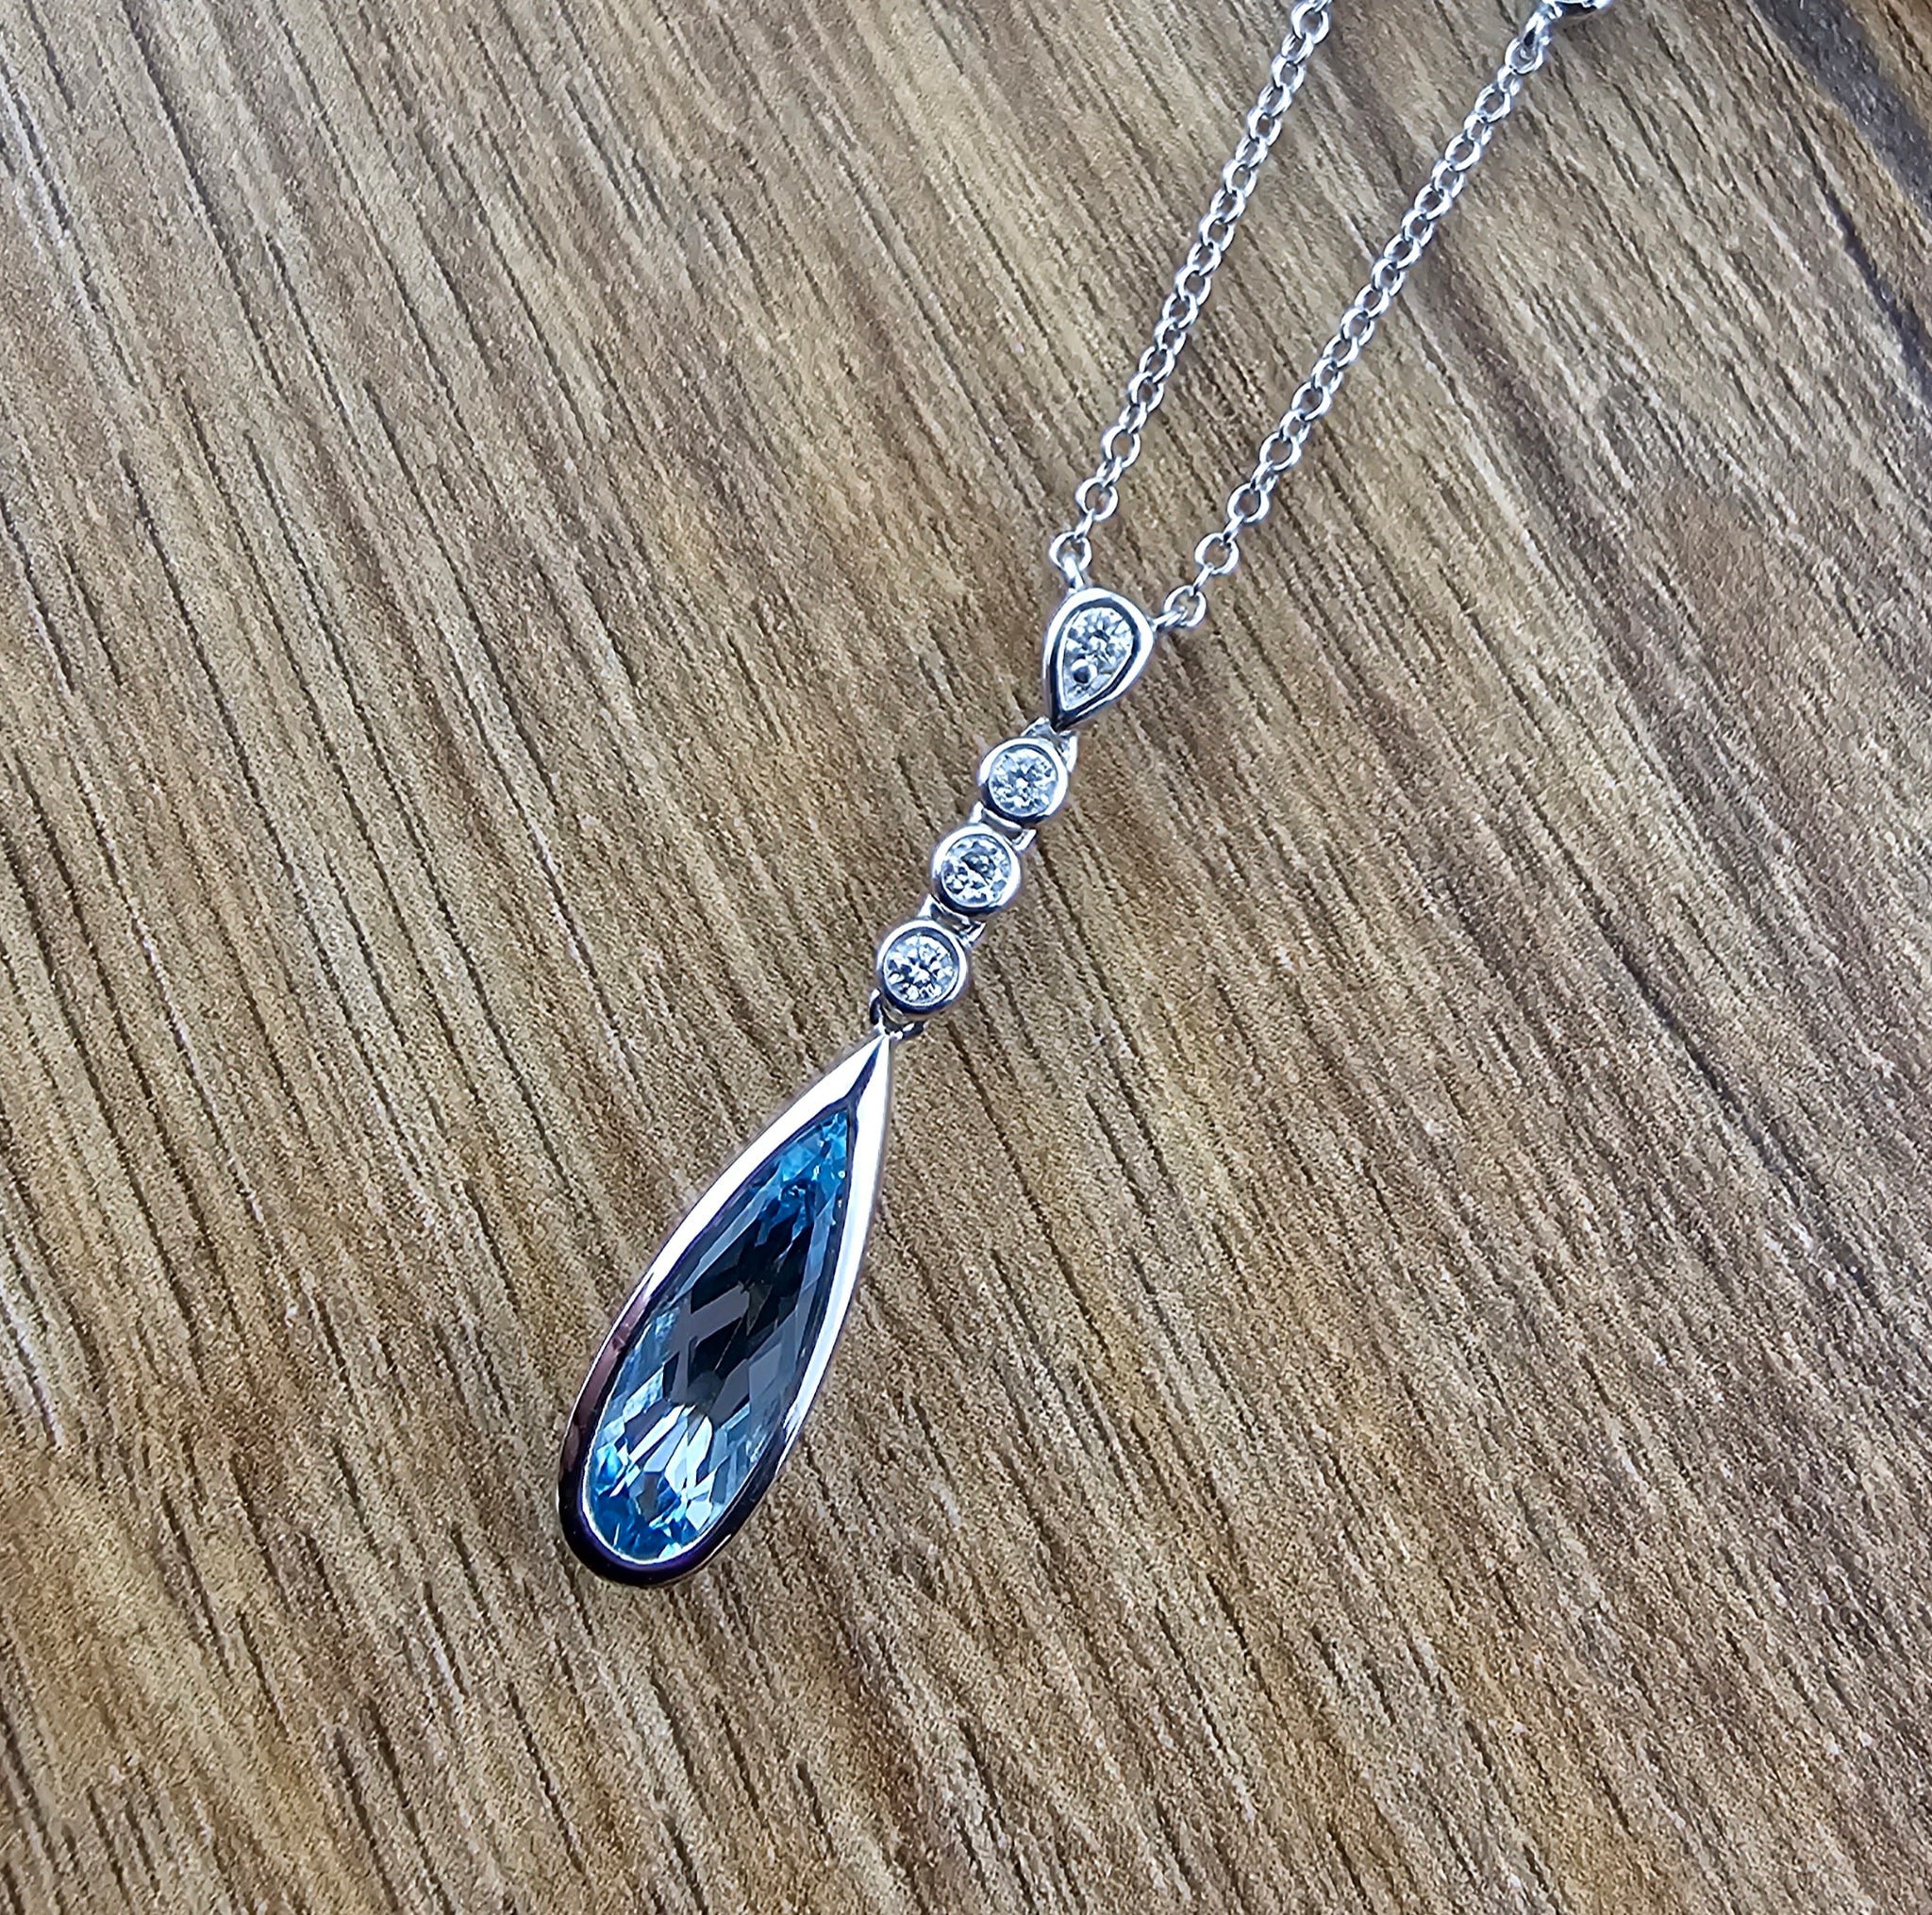 Pear shaped blue topaz pendant